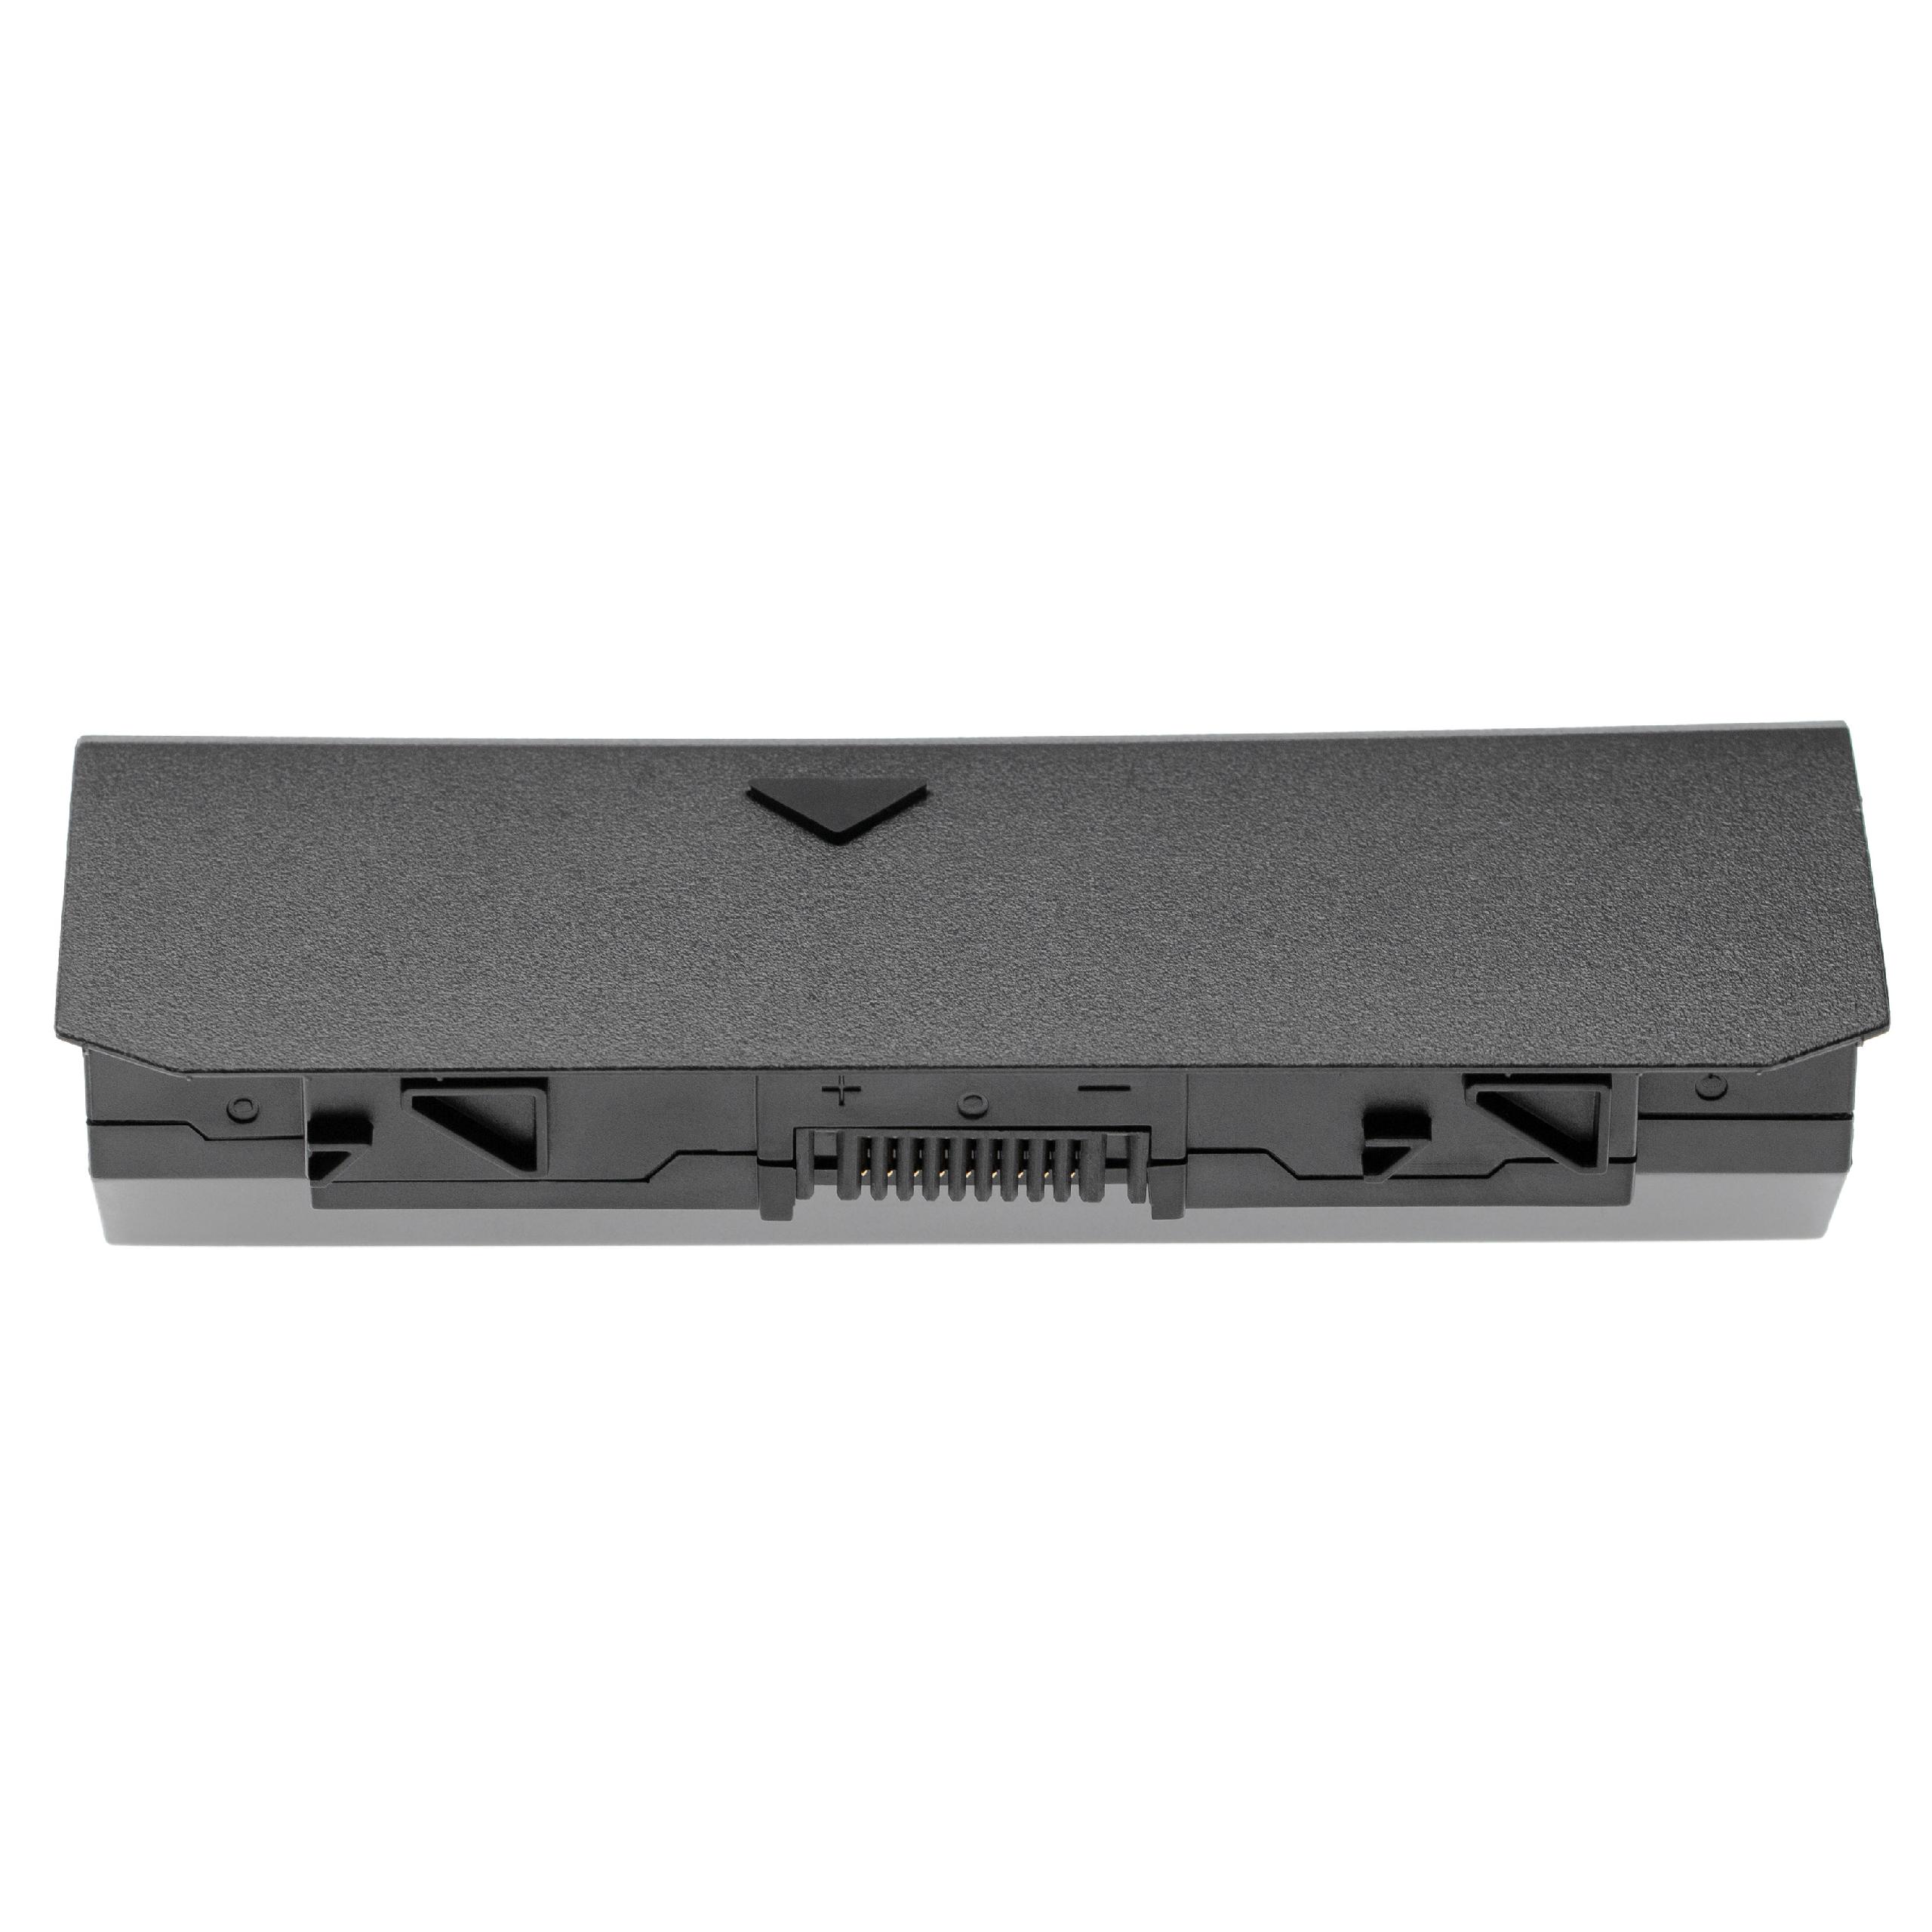 Akumulator do laptopa zamiennik Asus A42-G750 - 5900 mAh 15 V LiPo, czarny